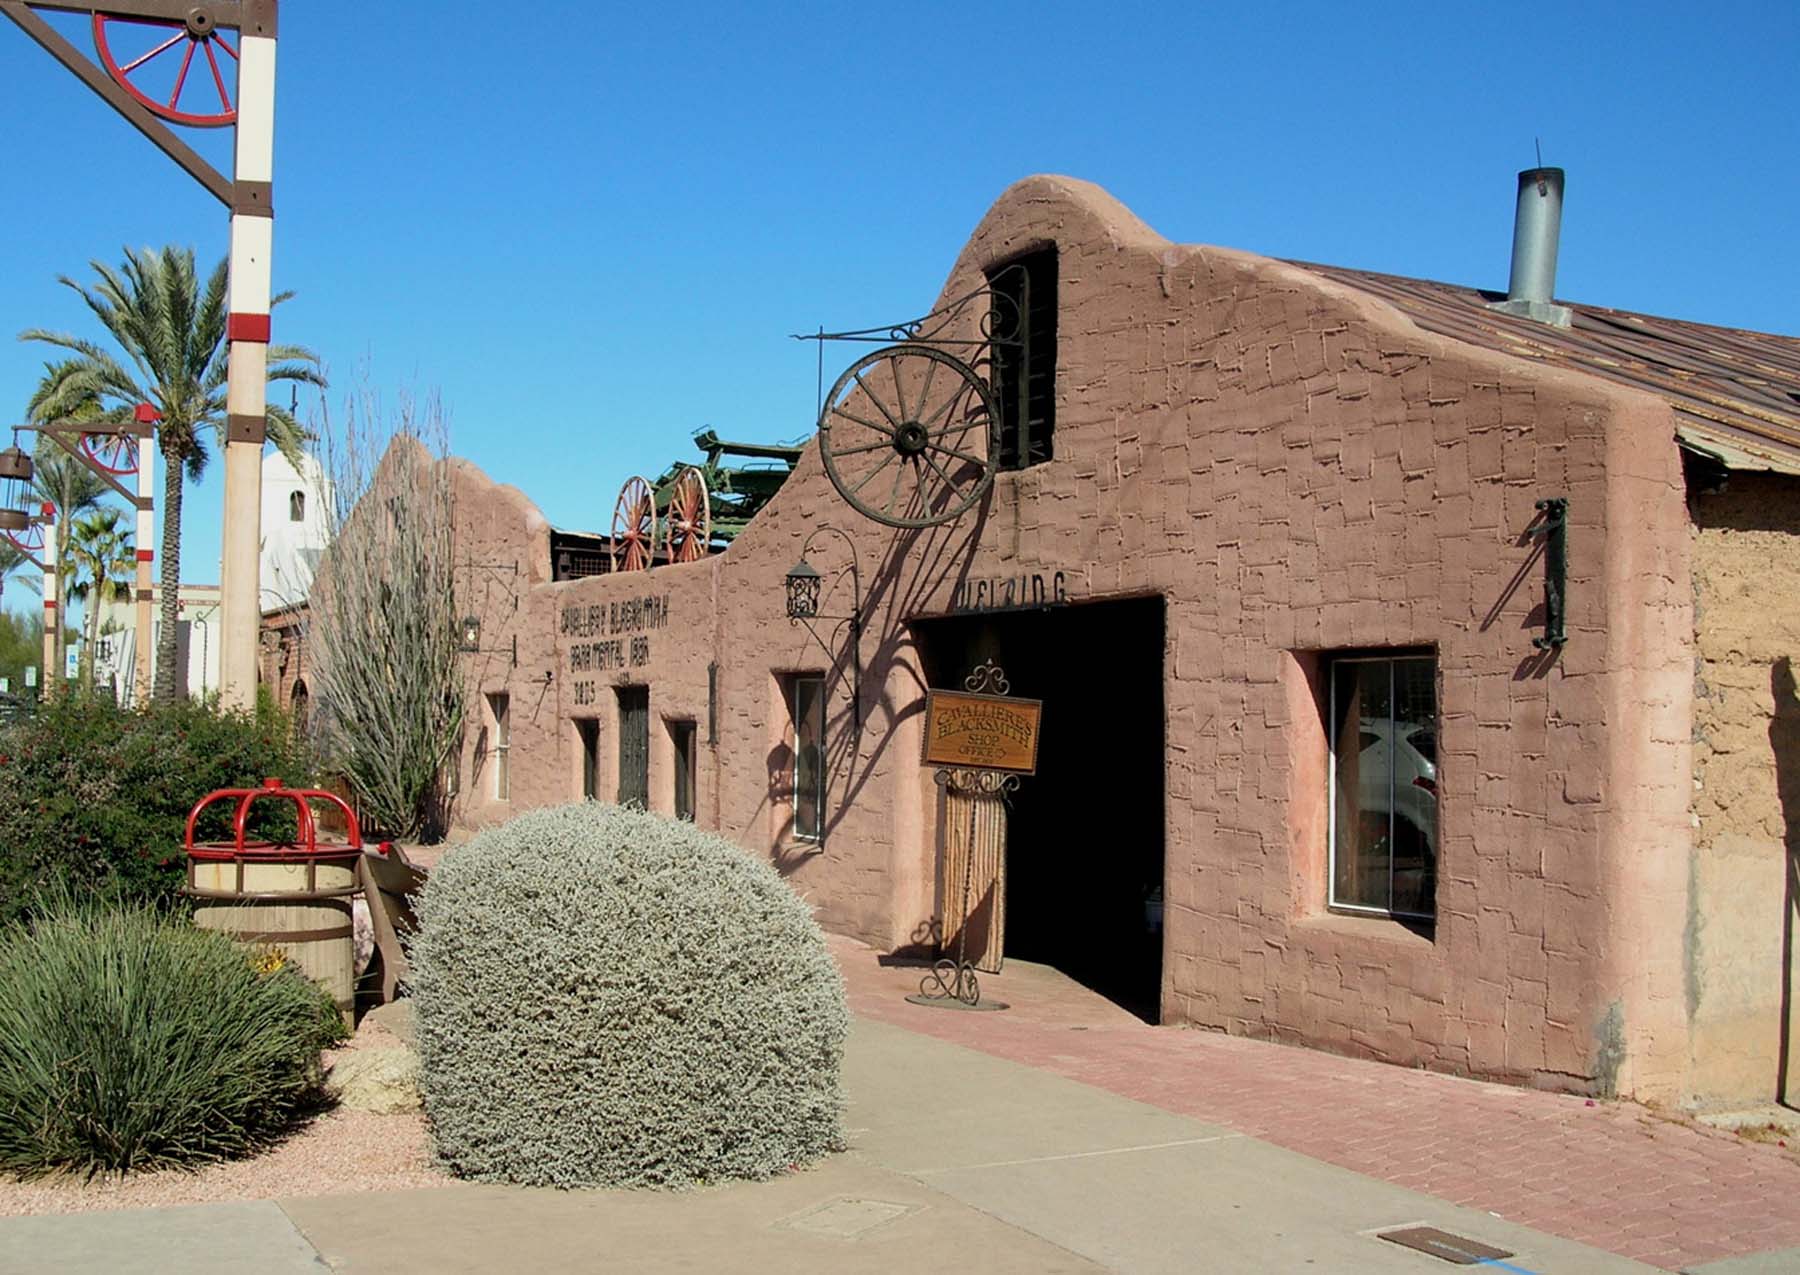 The Cavalliere Blacksmith Shop in Scottsdale, Arizona